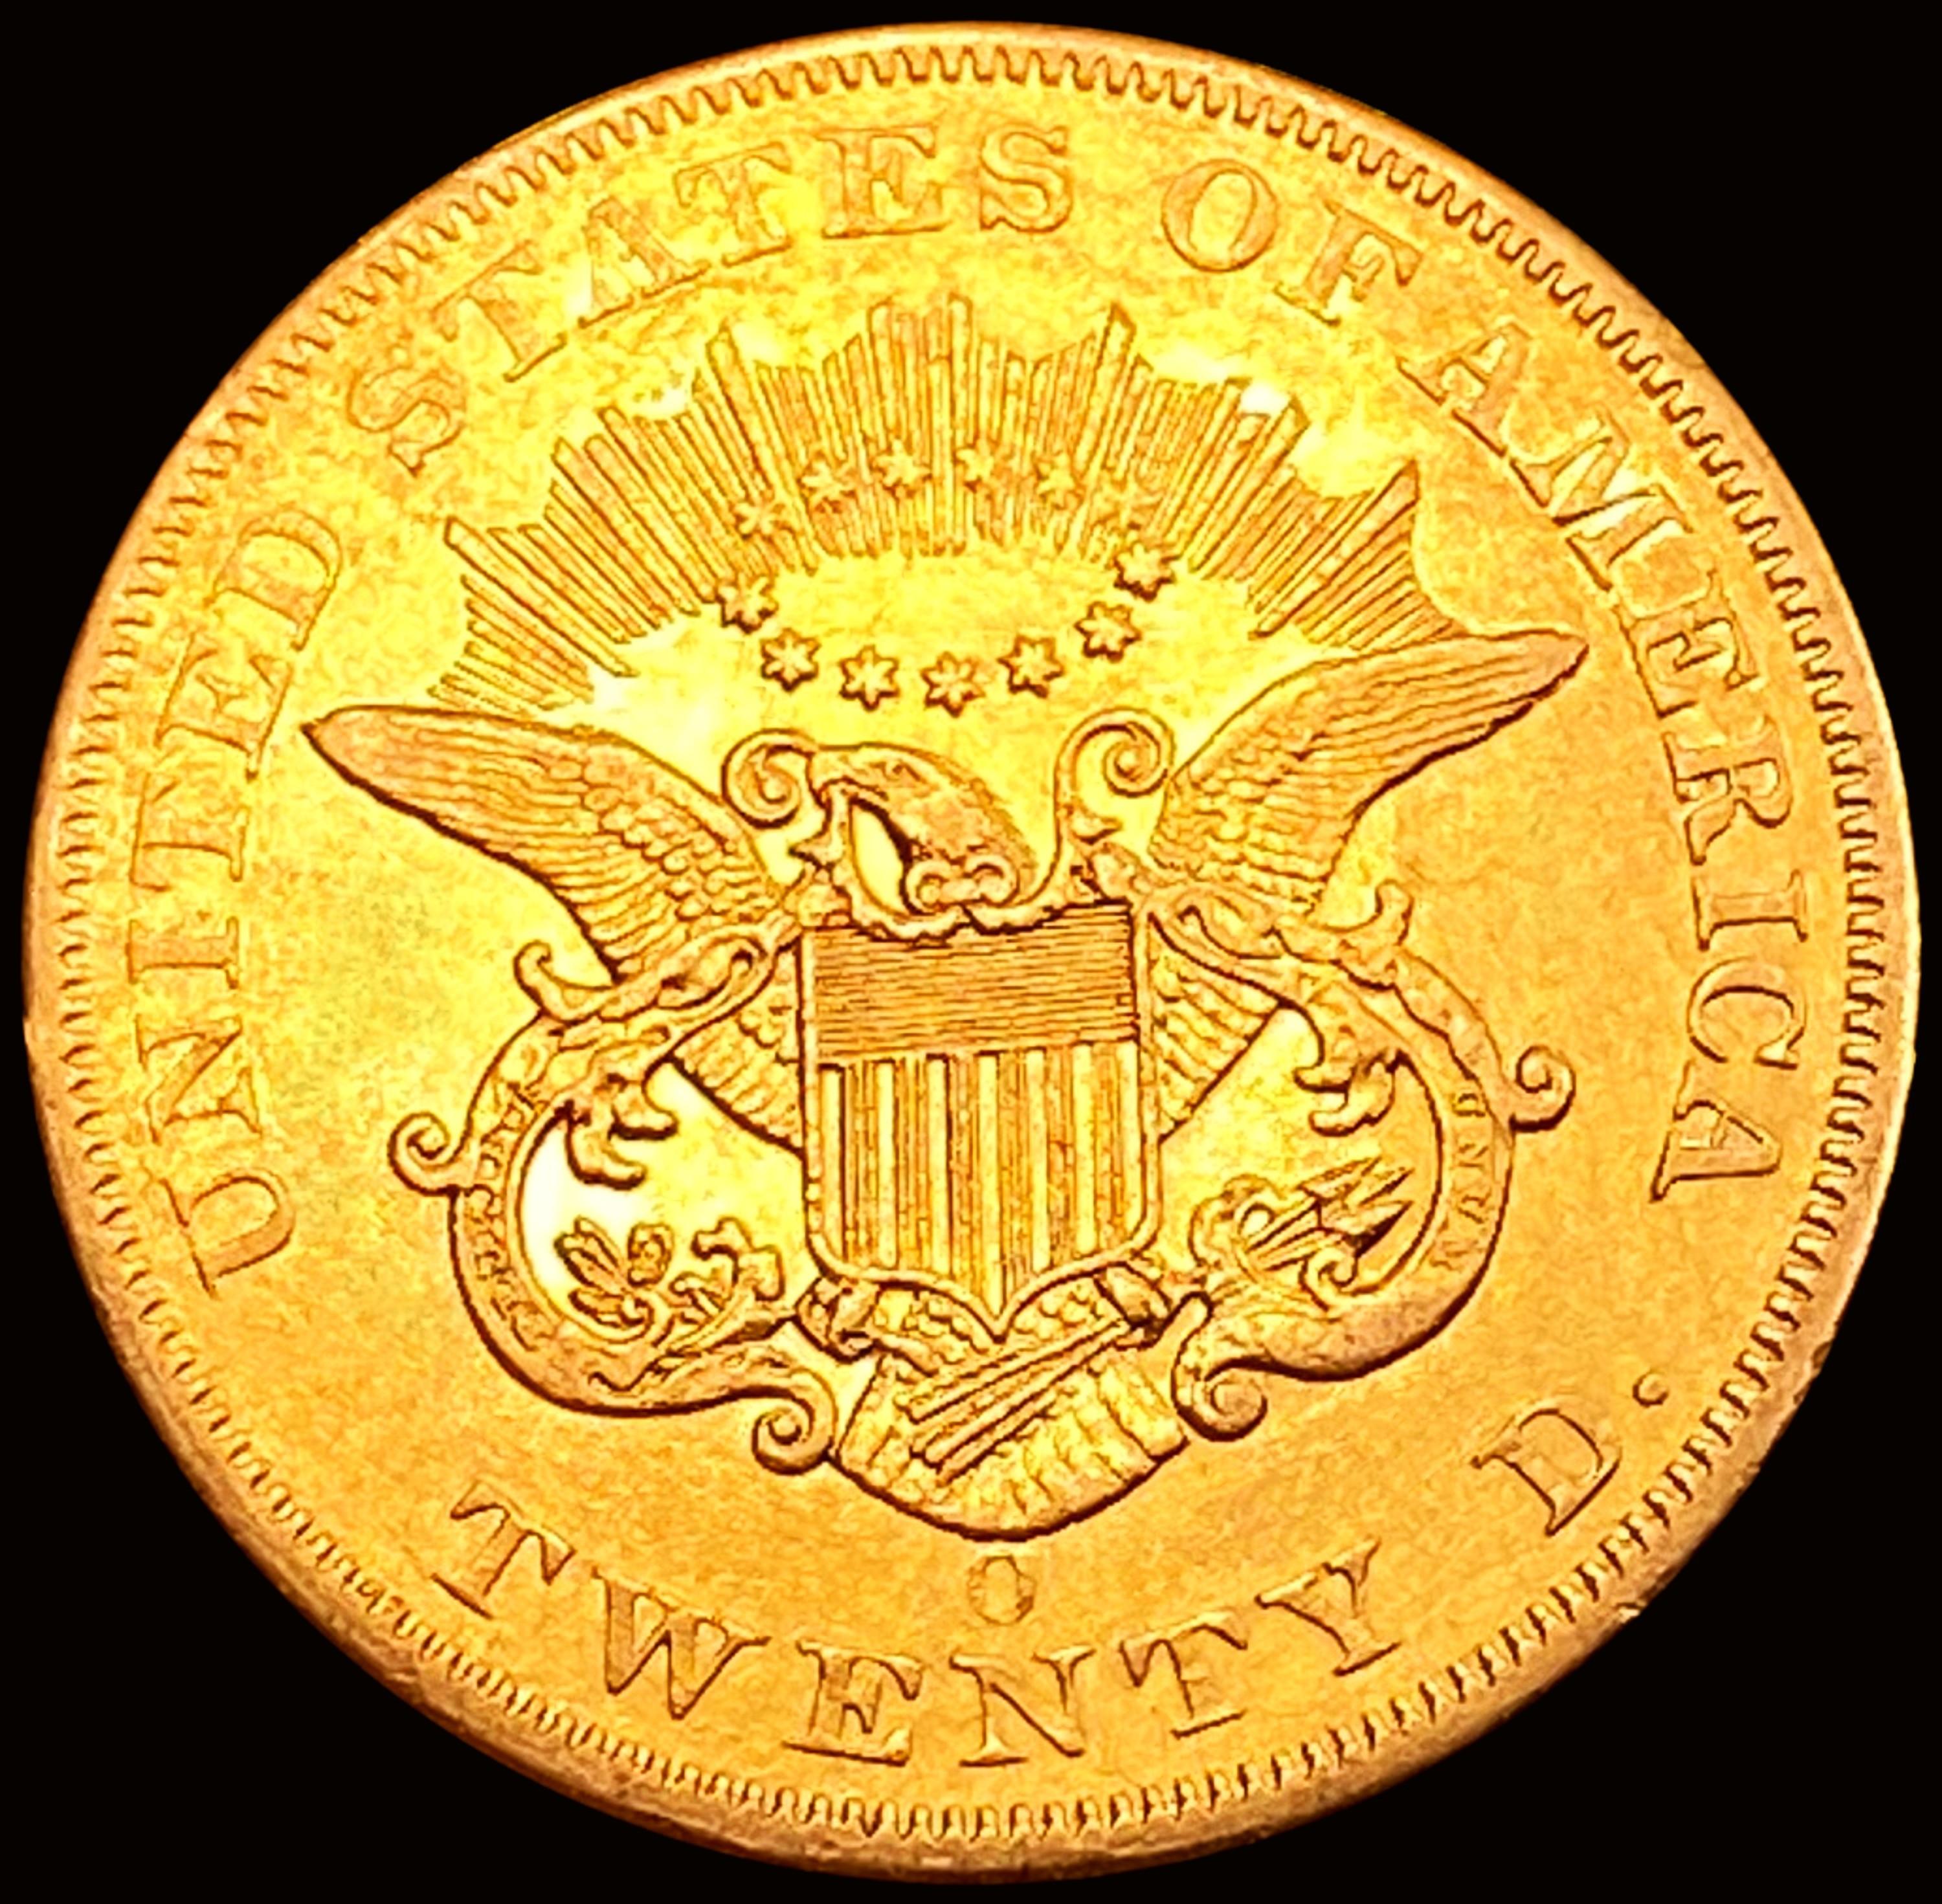 1853-O $20 Gold Double Eagle UNCIRCULATED